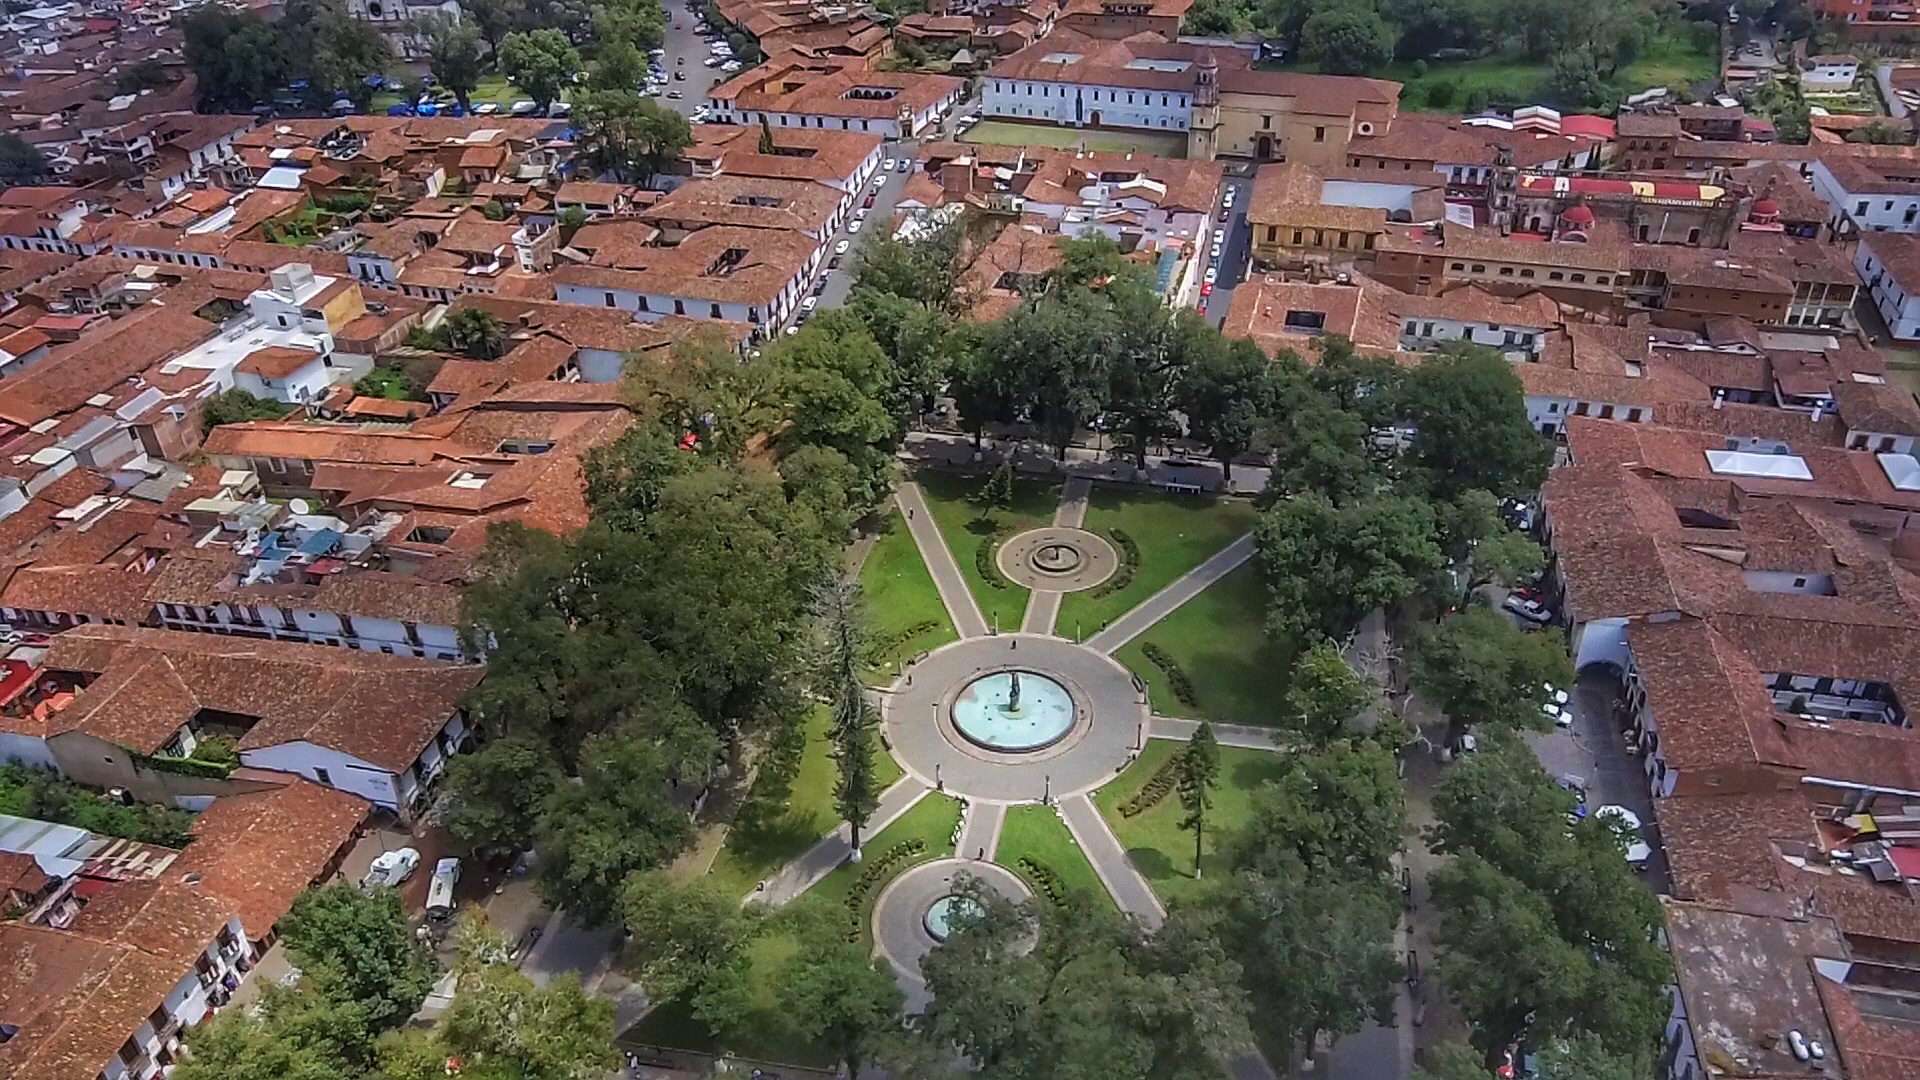 Abren plaza Vasco de Quiroga de Pátzcuaro tras cierre por pandemia de COVID-19